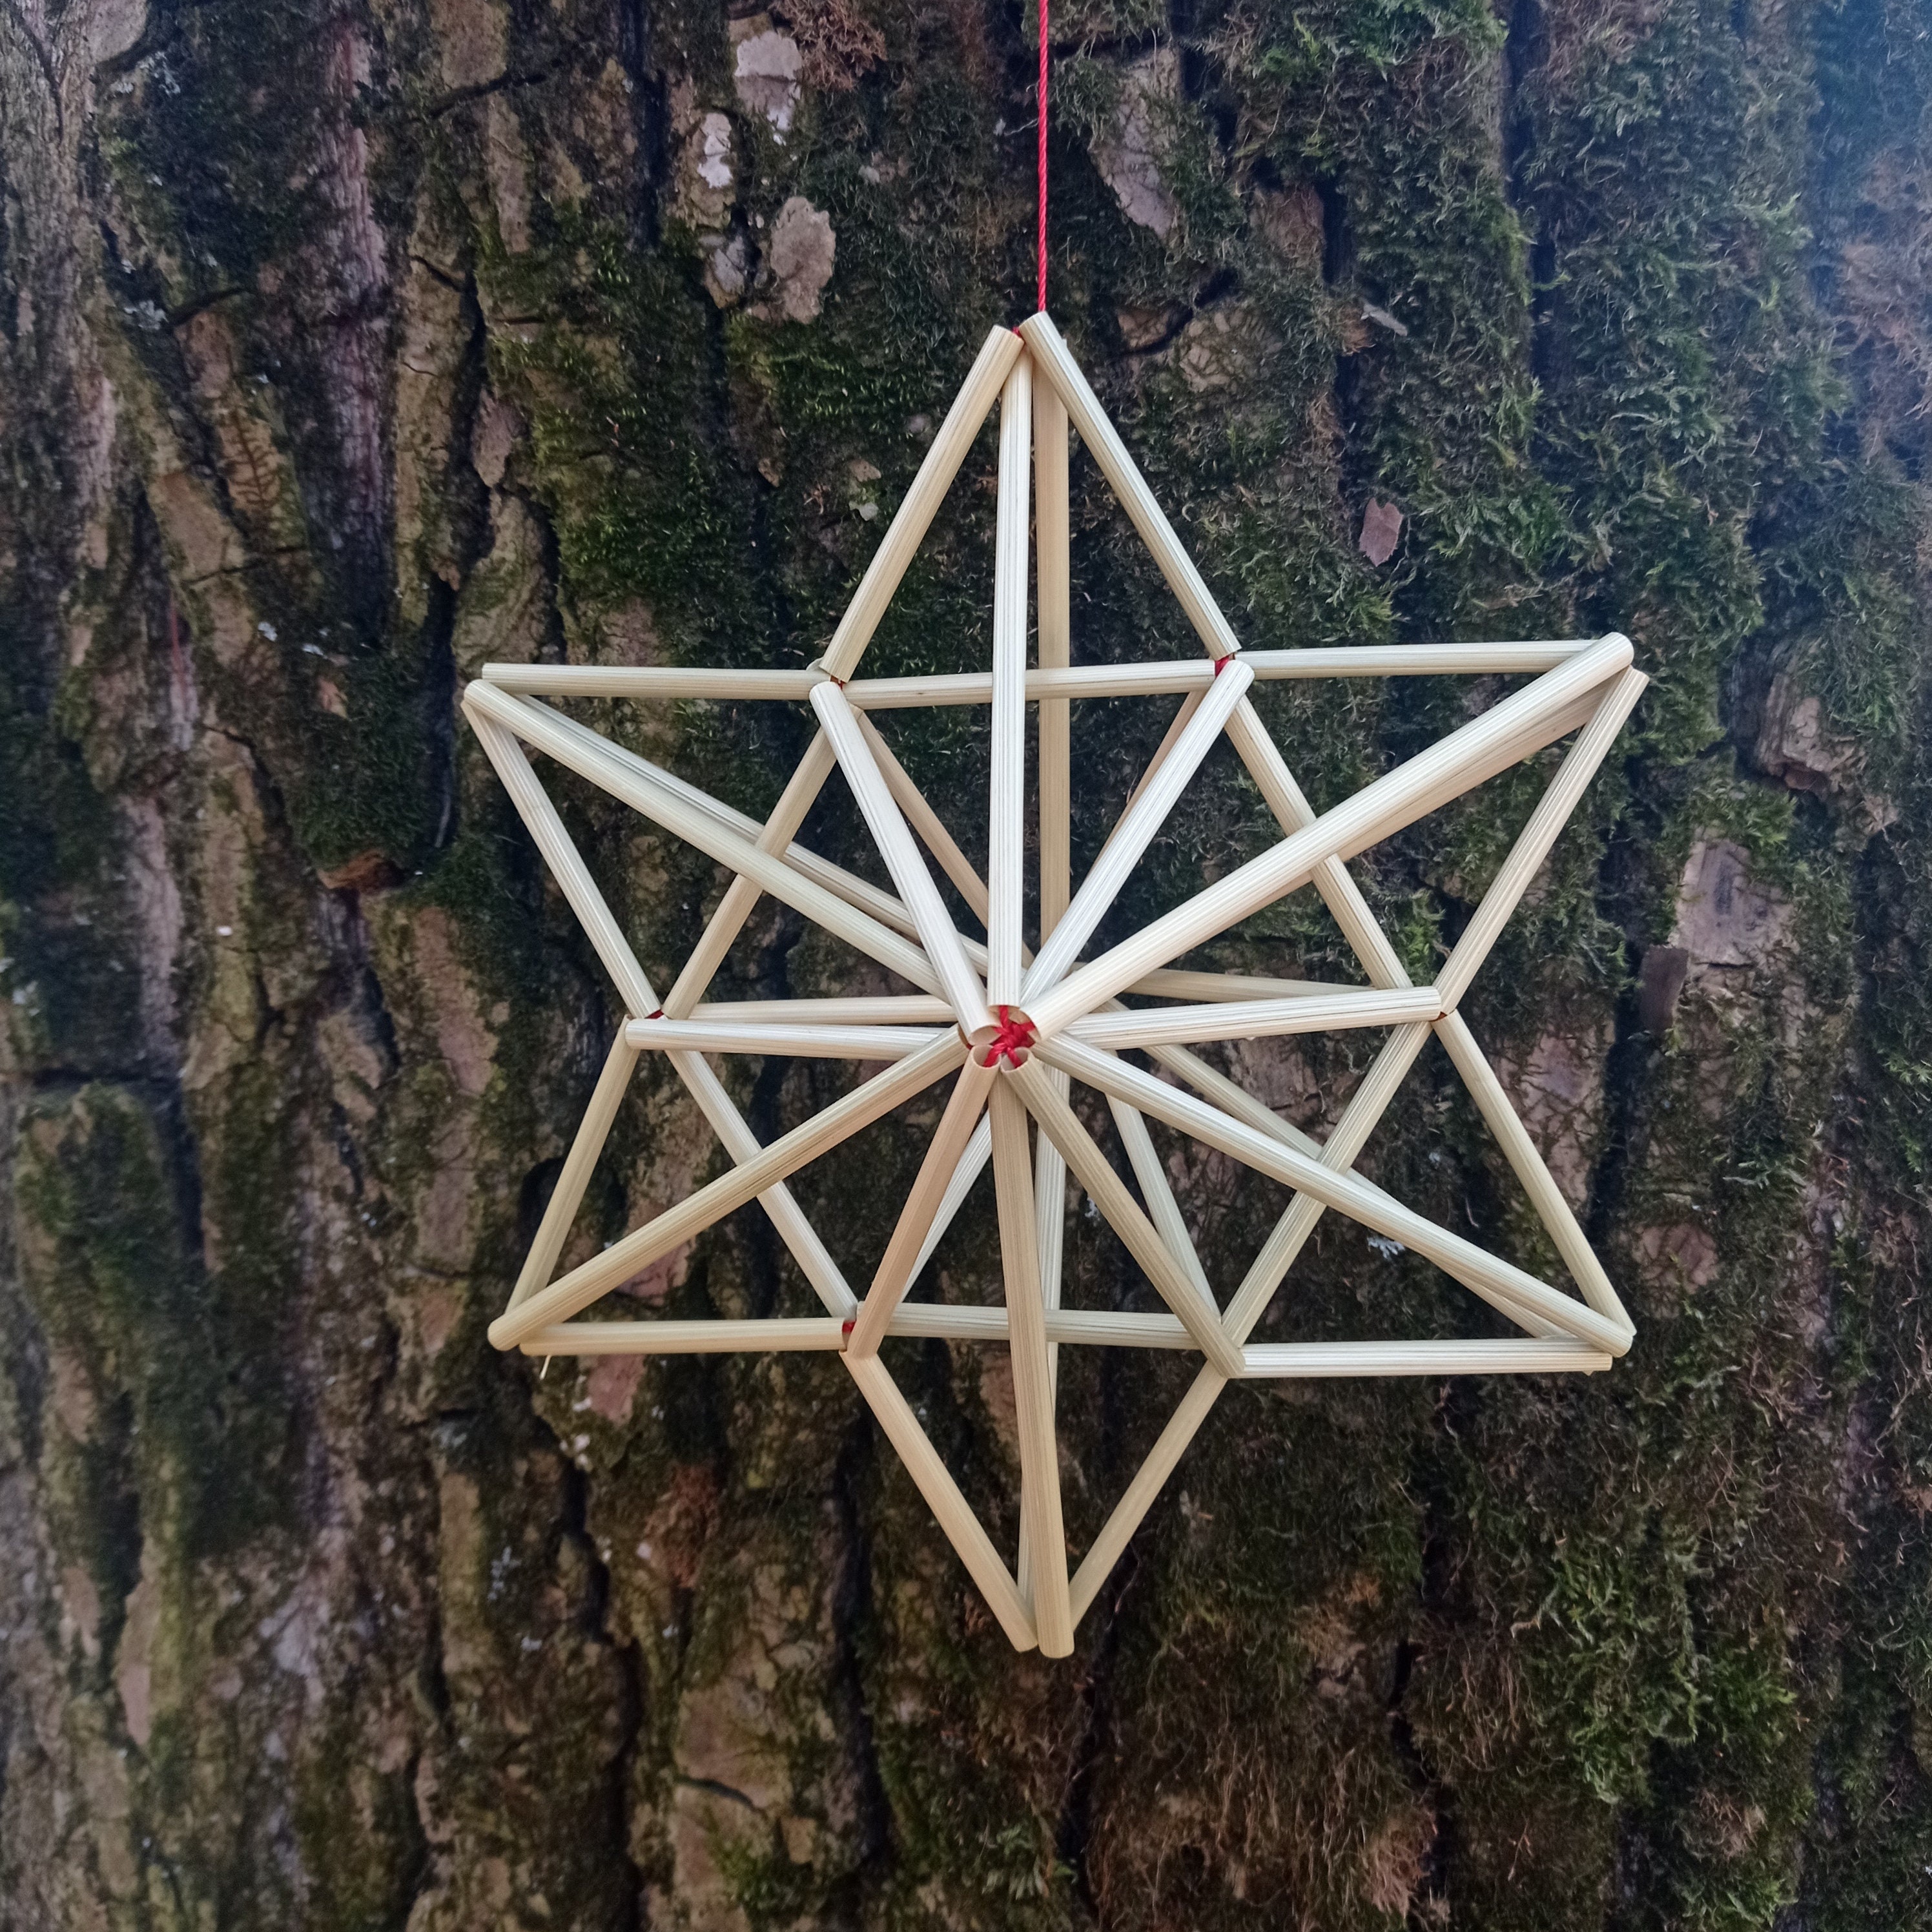 Over on eHow: DIY Himmeli Christmas Tree Star Topper